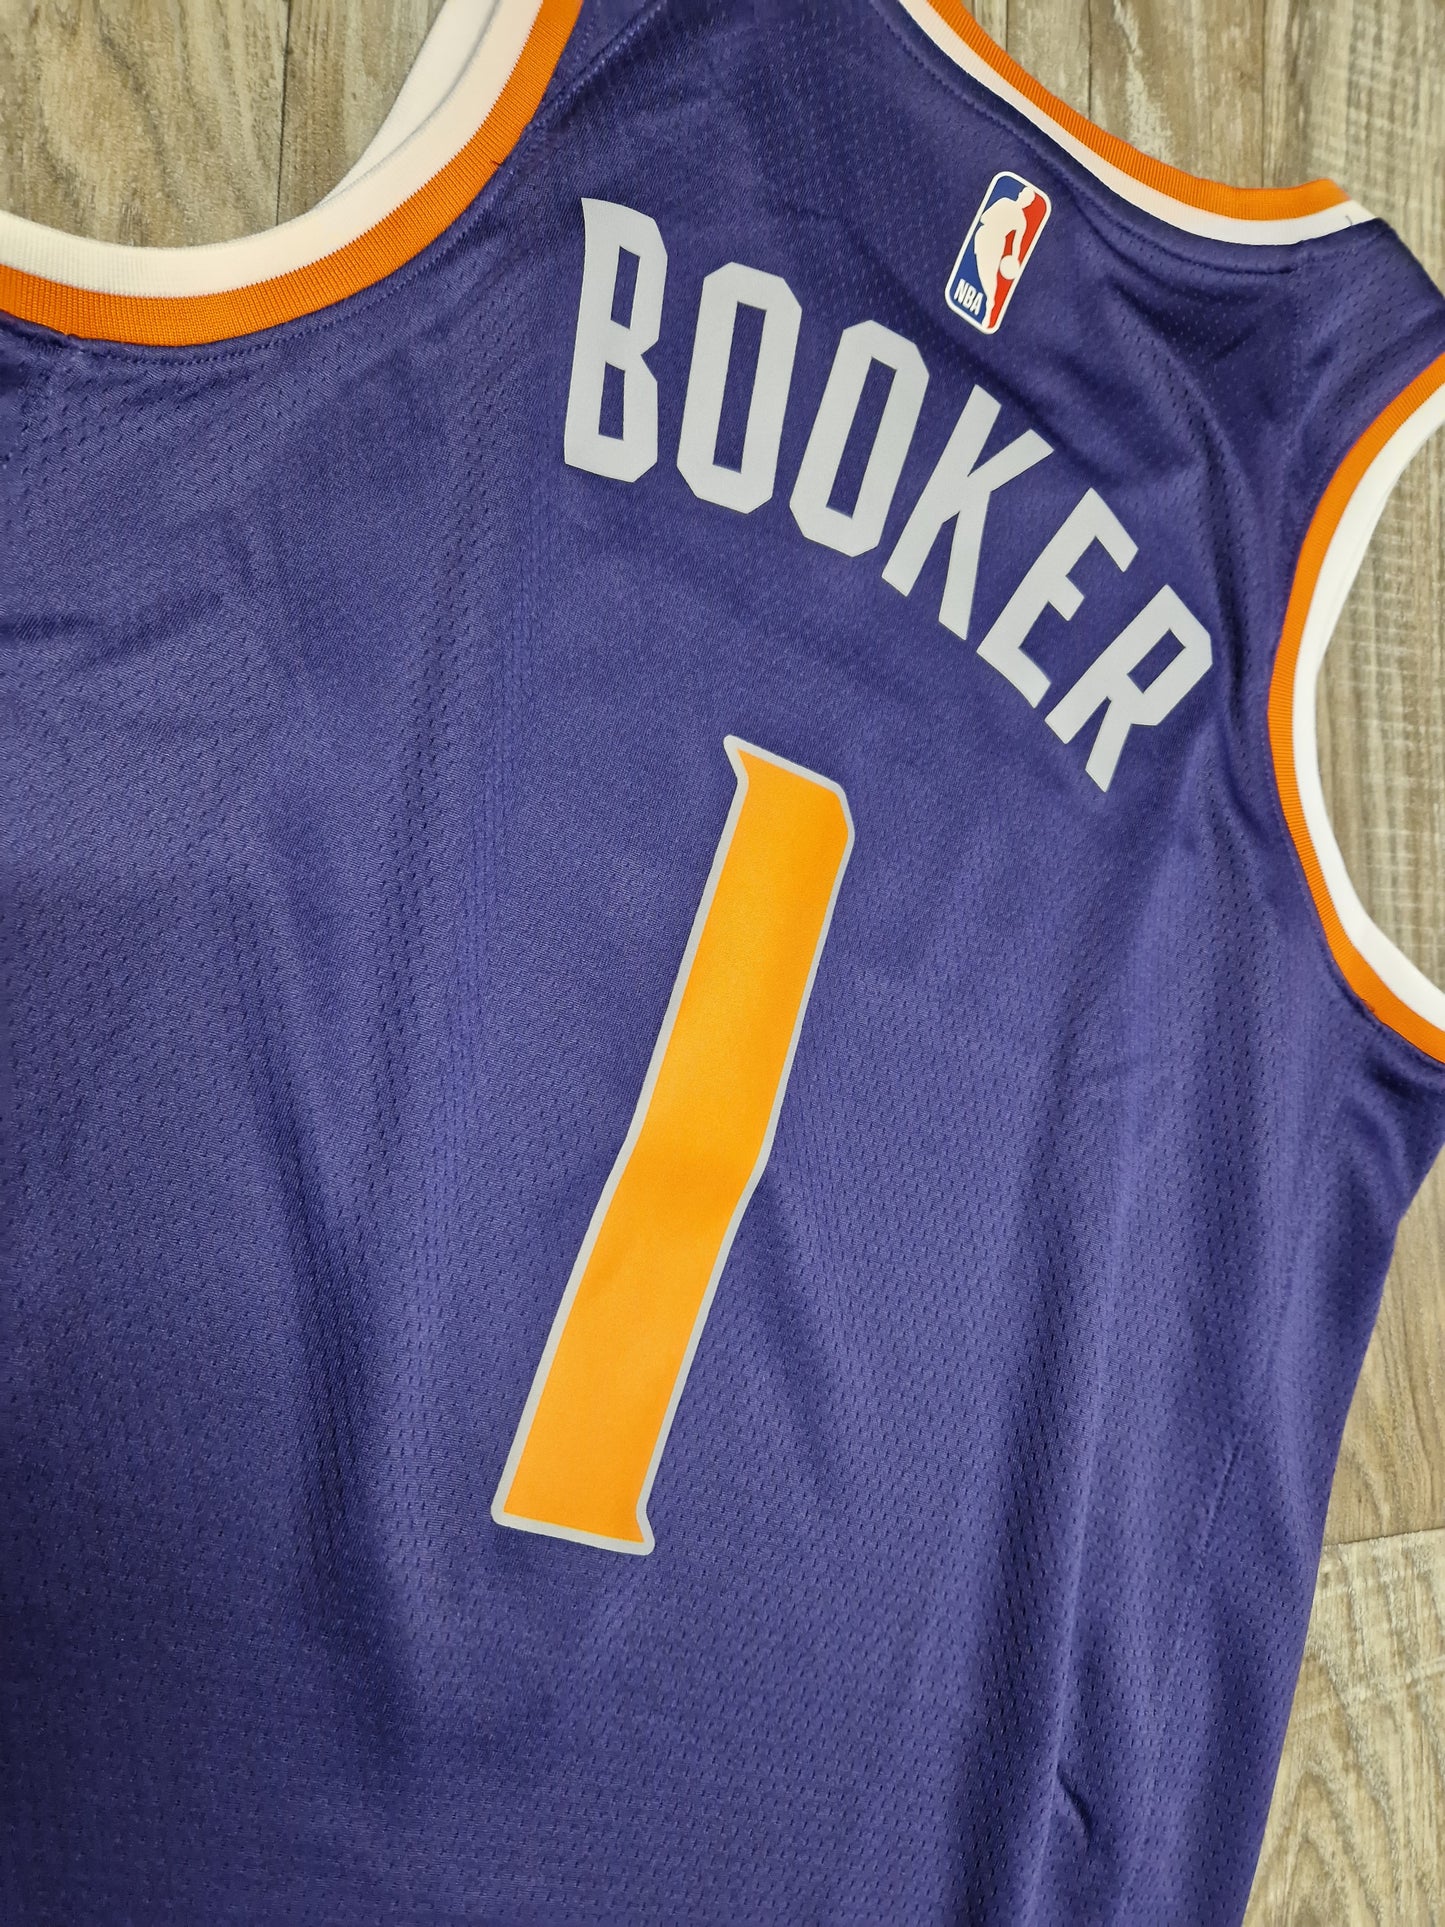 Devin Booker Phoenix Suns Jersey Size Medium